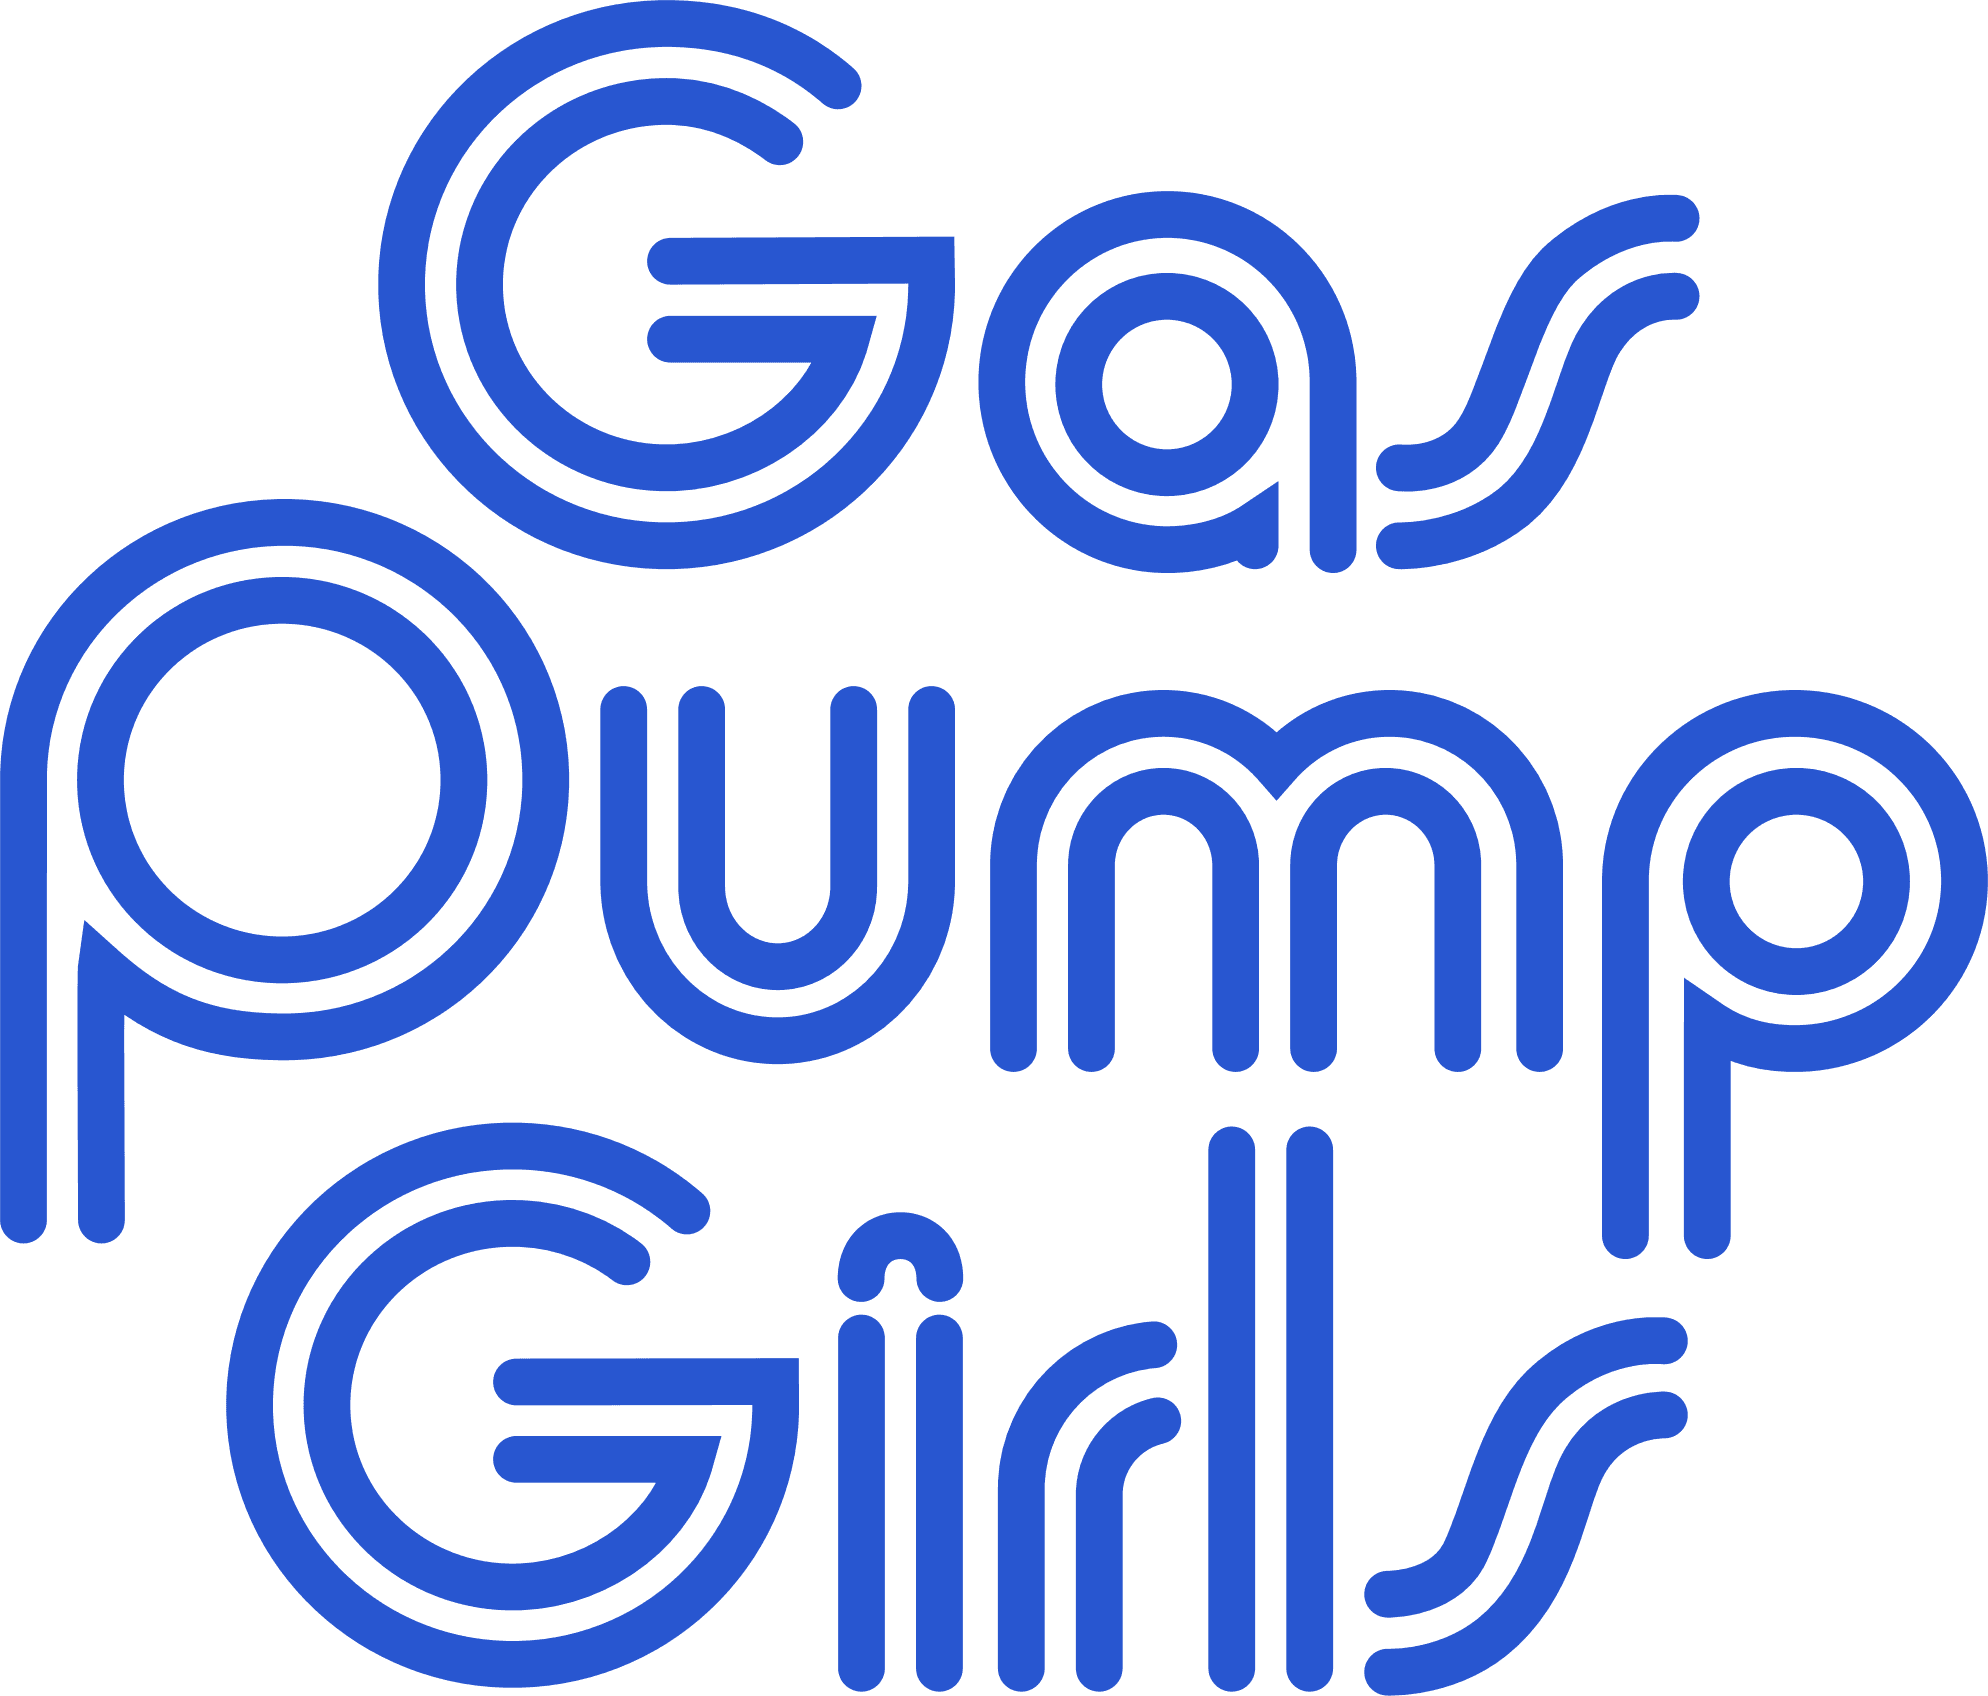 Gas Pump Girls logo